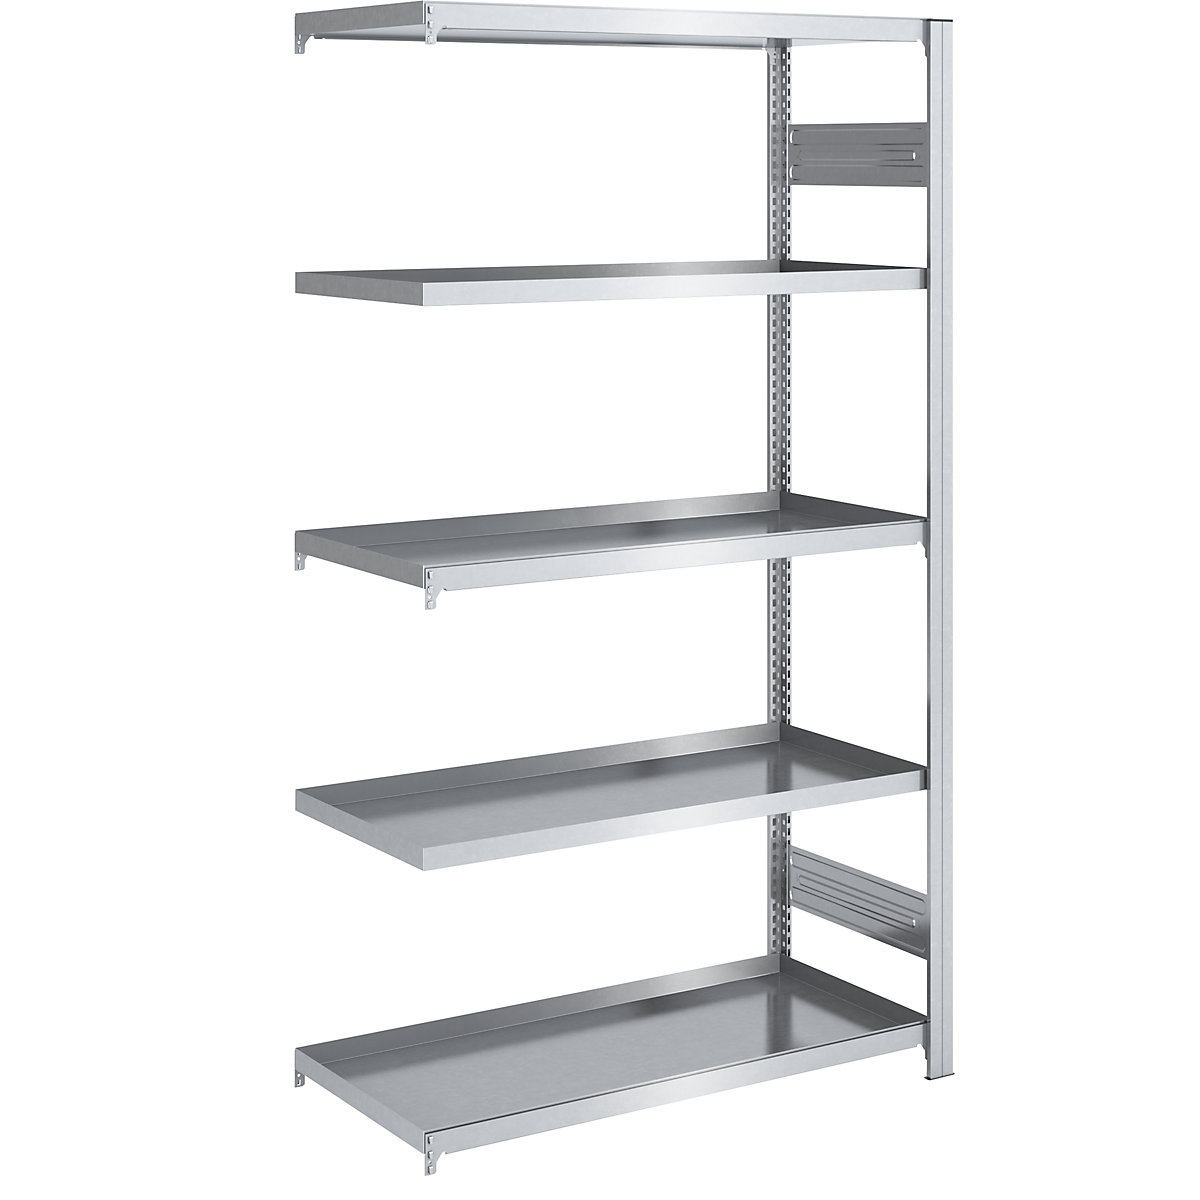 Tray shelf unit – hofe, shelf unit height 2000 mm, tray width 1000 mm, tray depth 600 mm, extension shelf unit